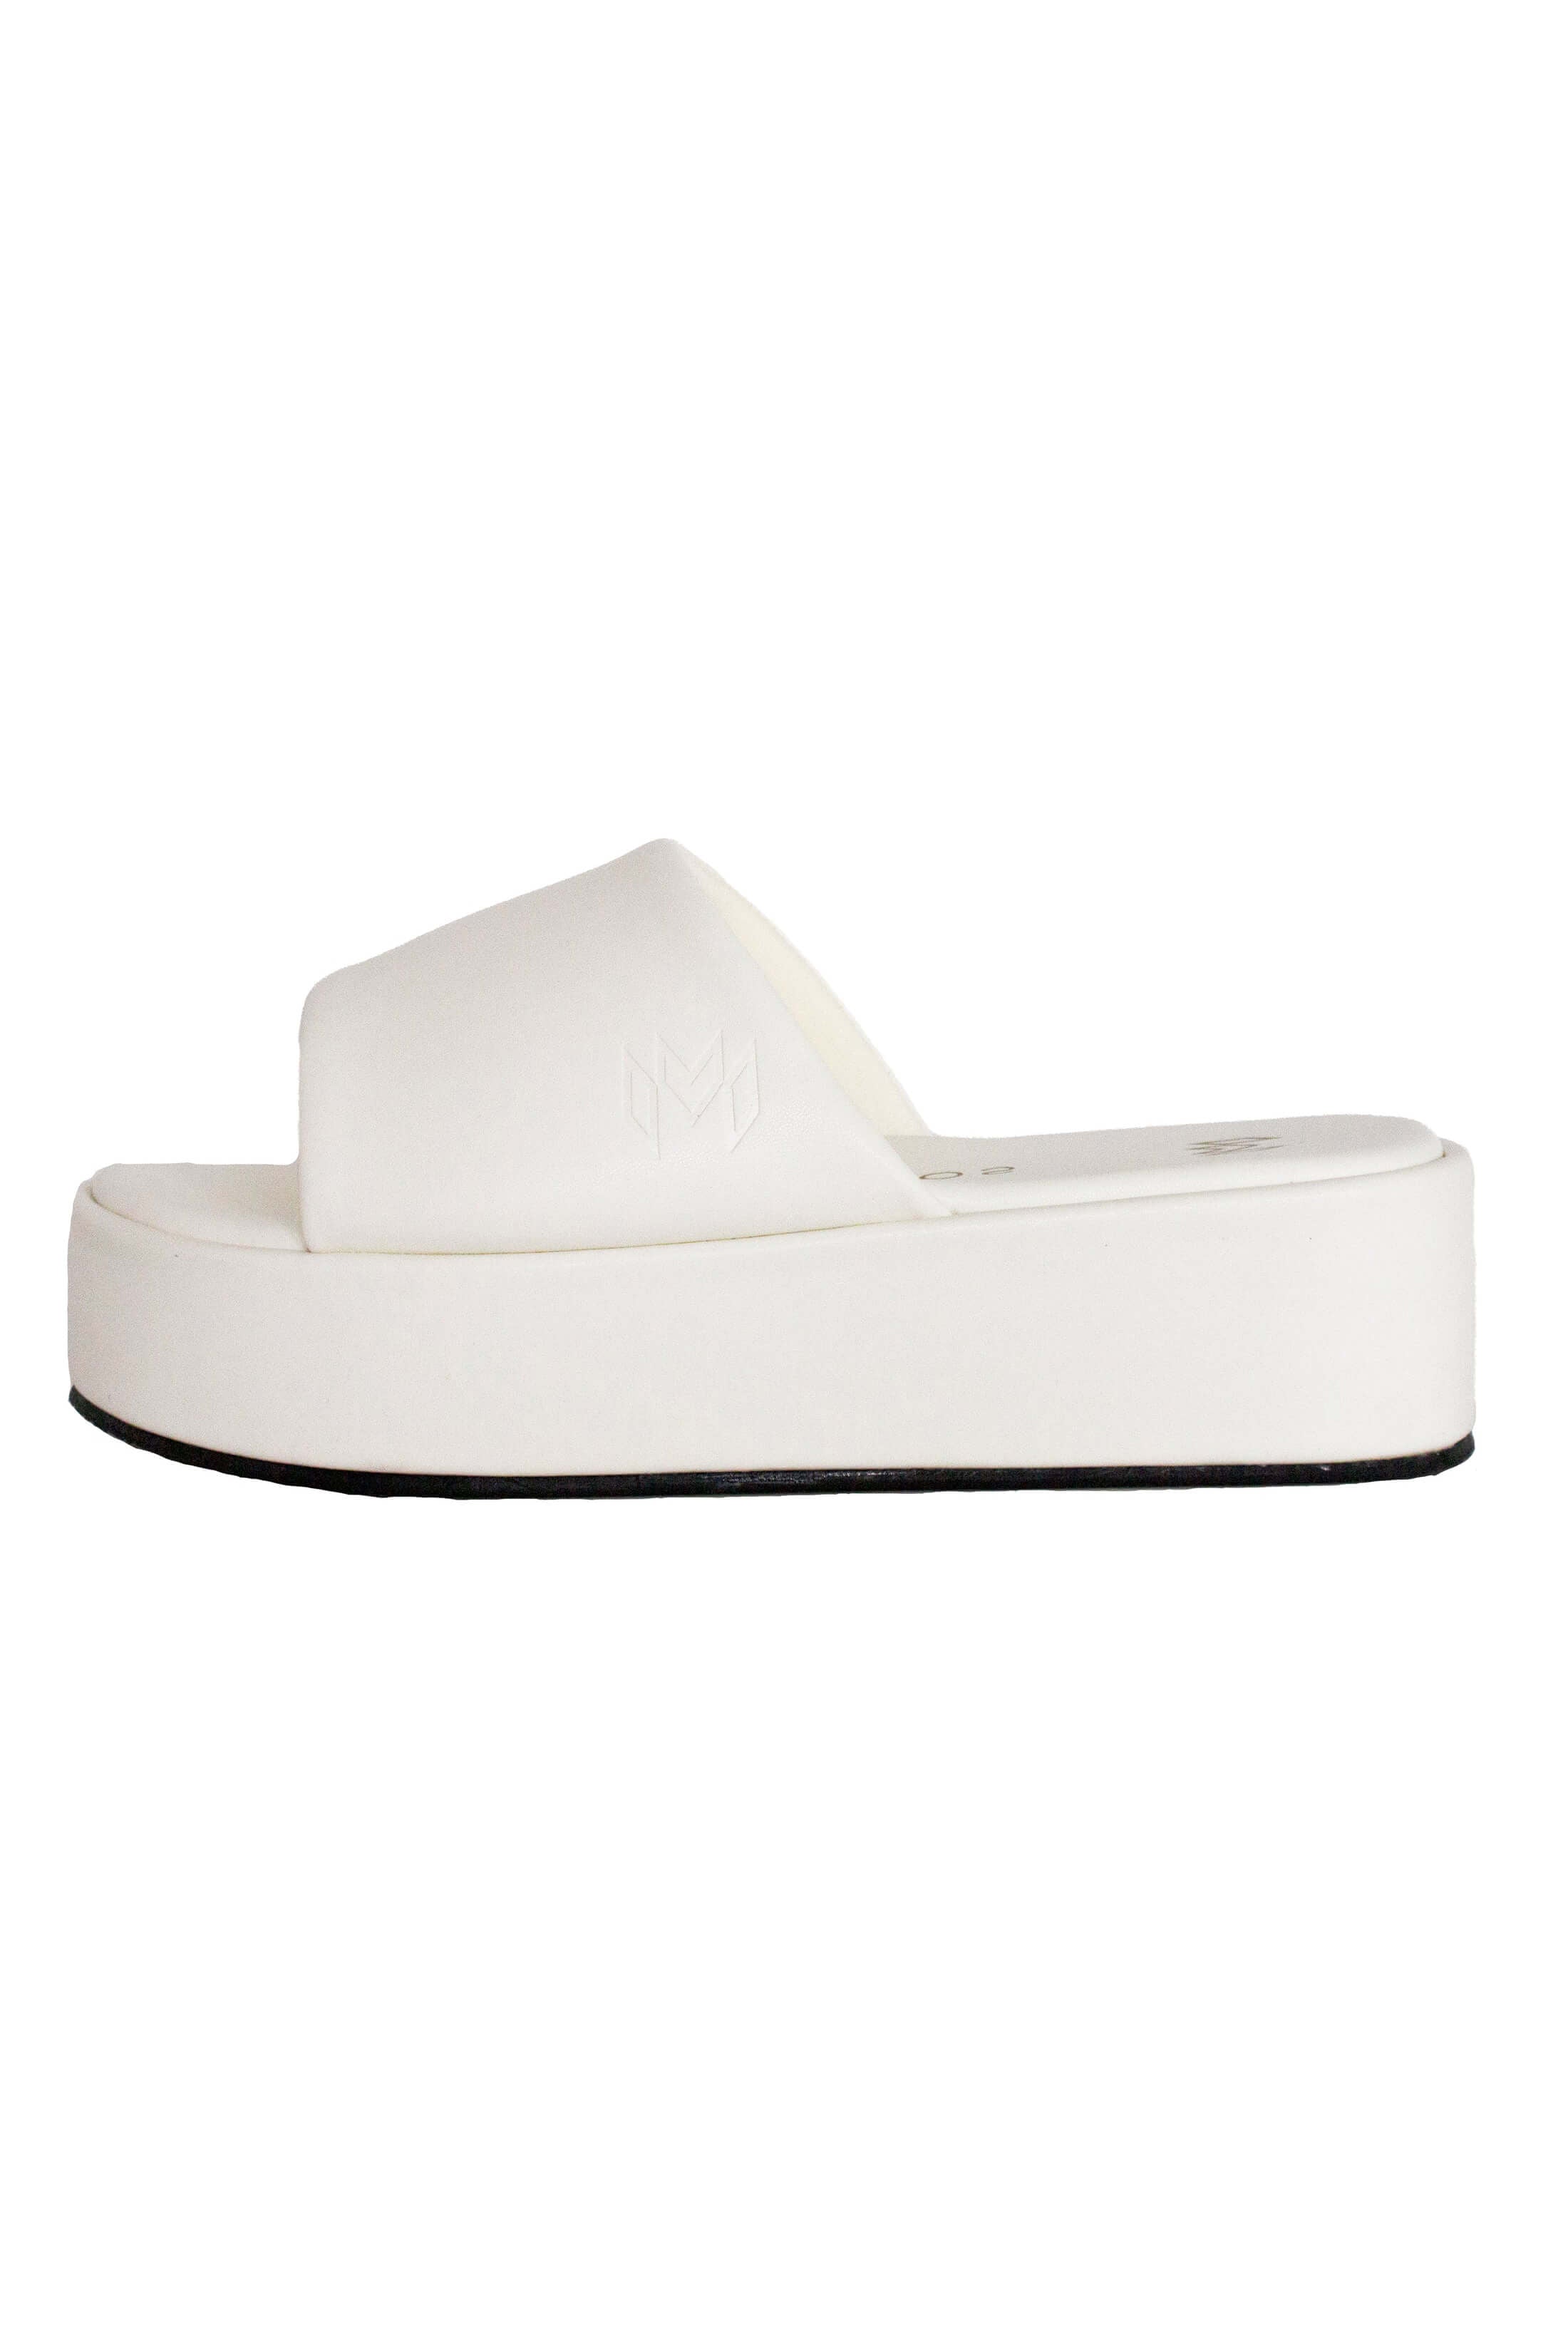 white platform wedge sandal